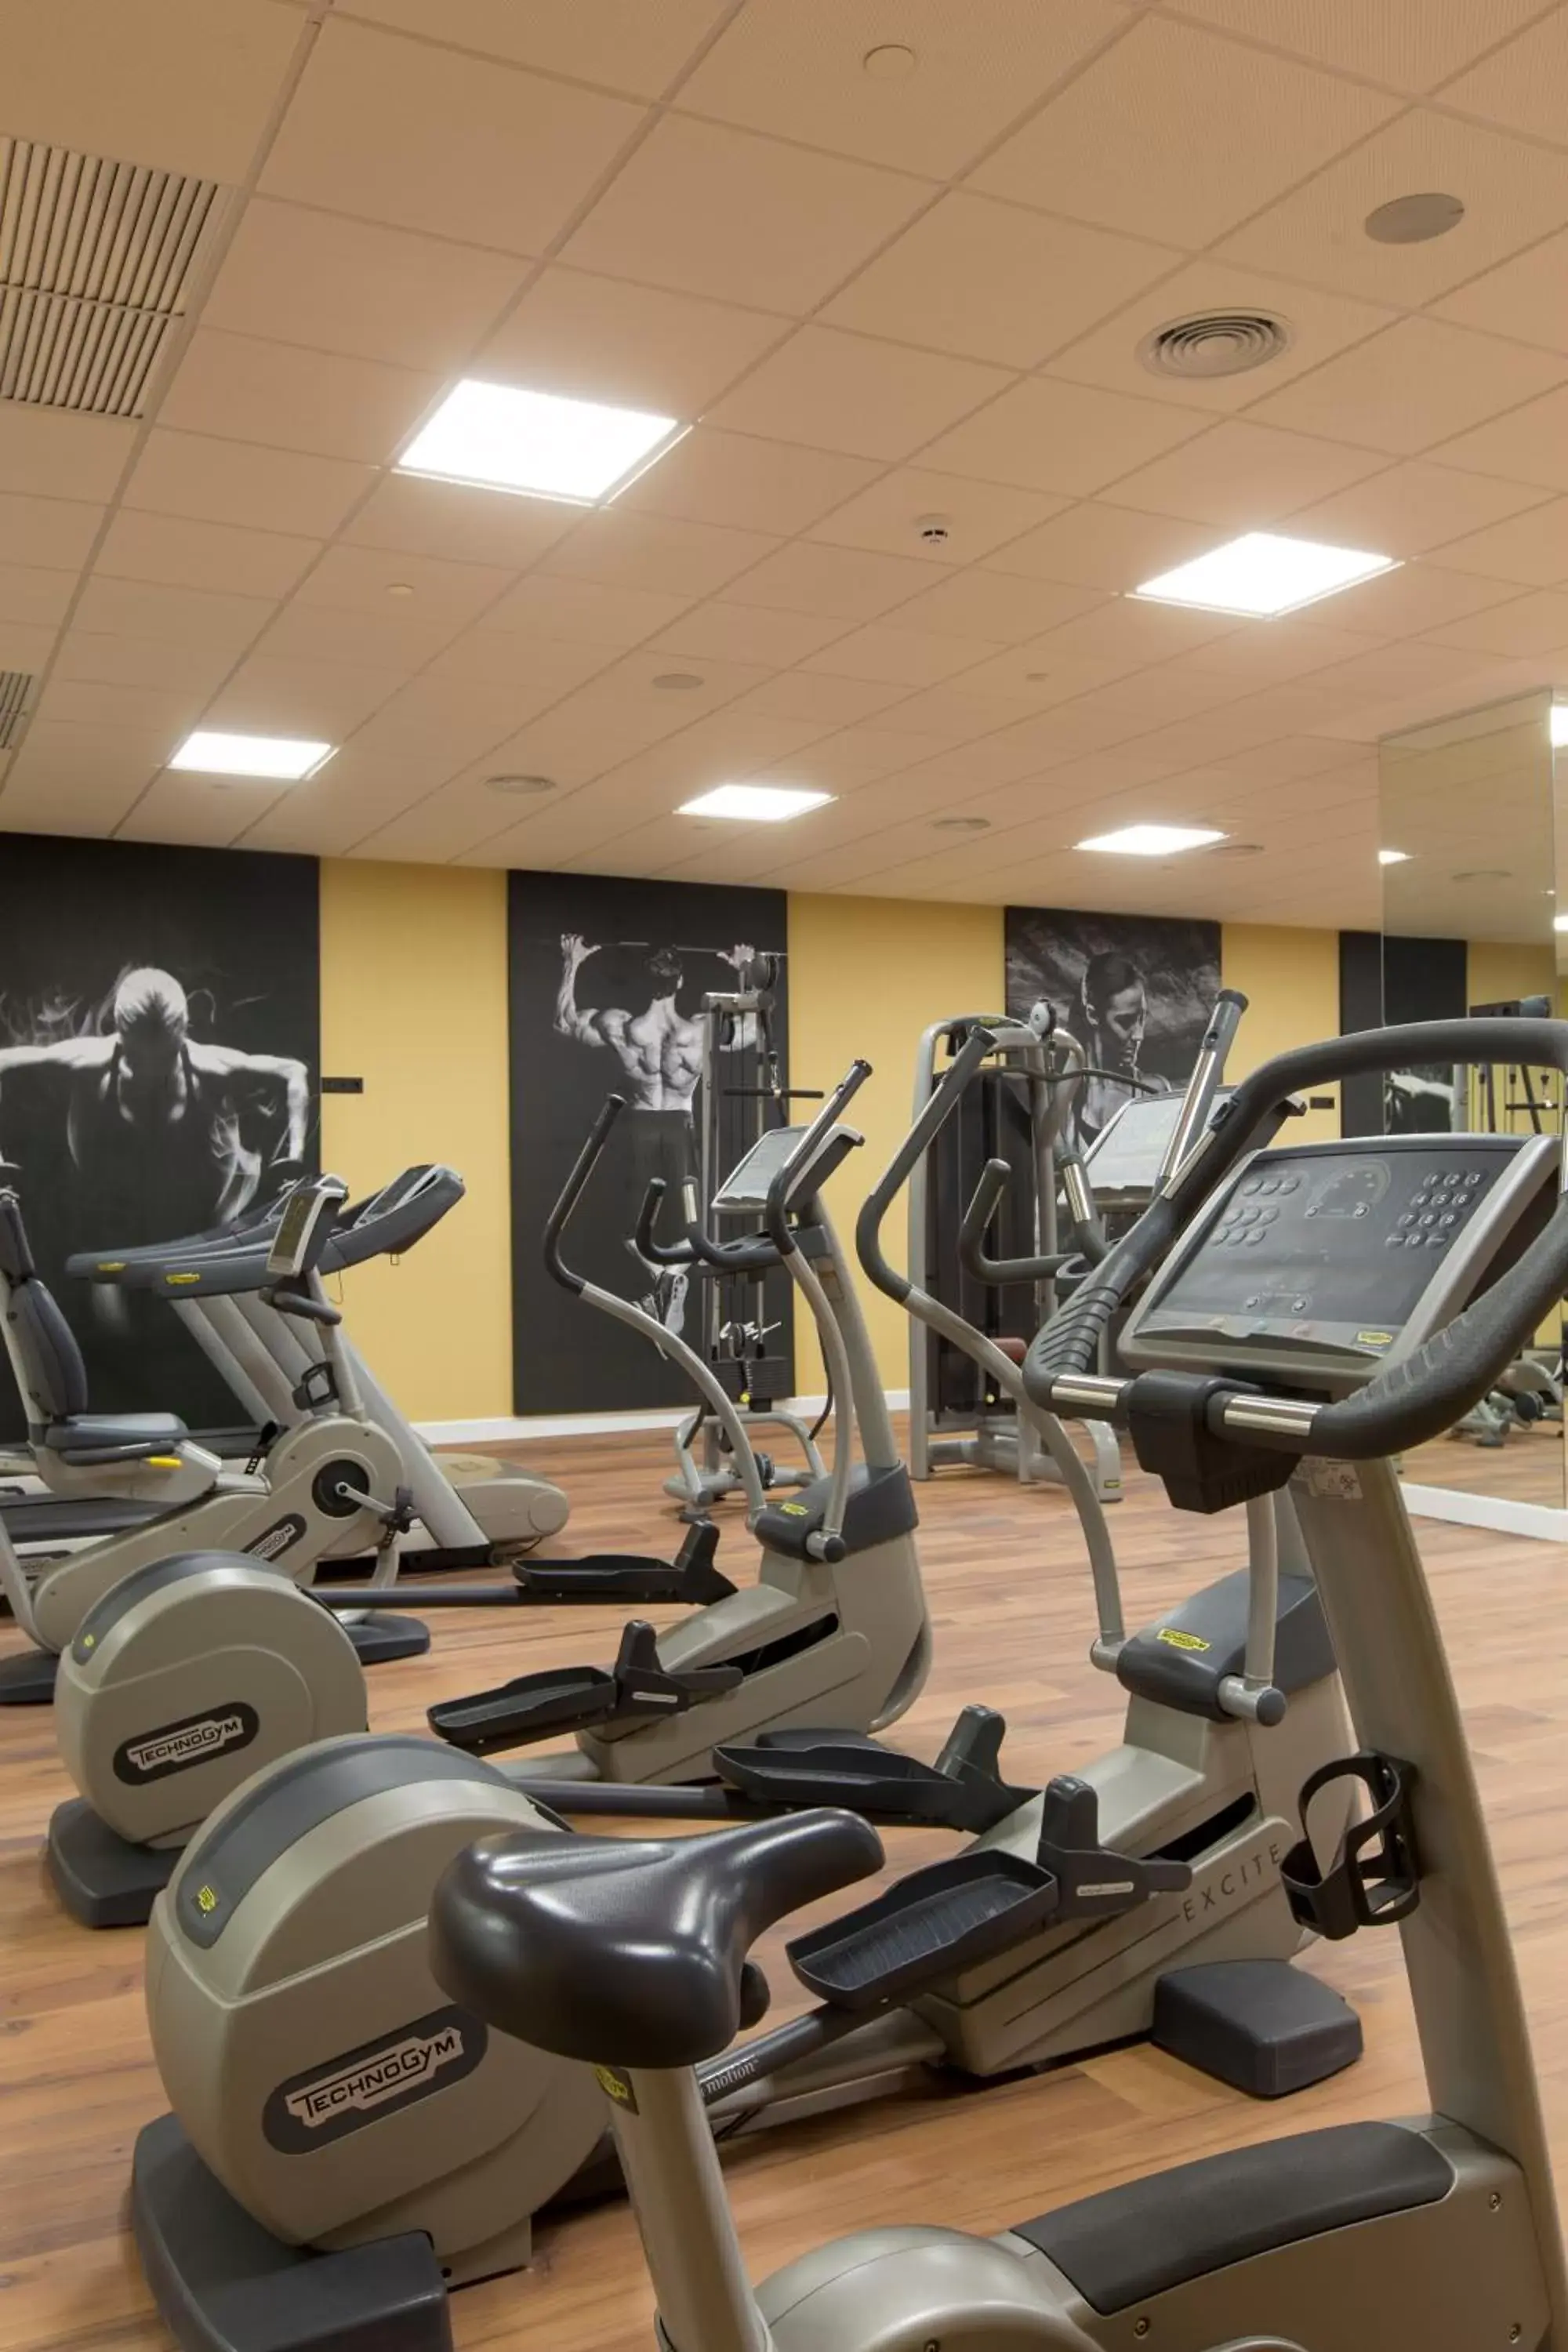 Fitness centre/facilities, Fitness Center/Facilities in Grand Luxor Hotel